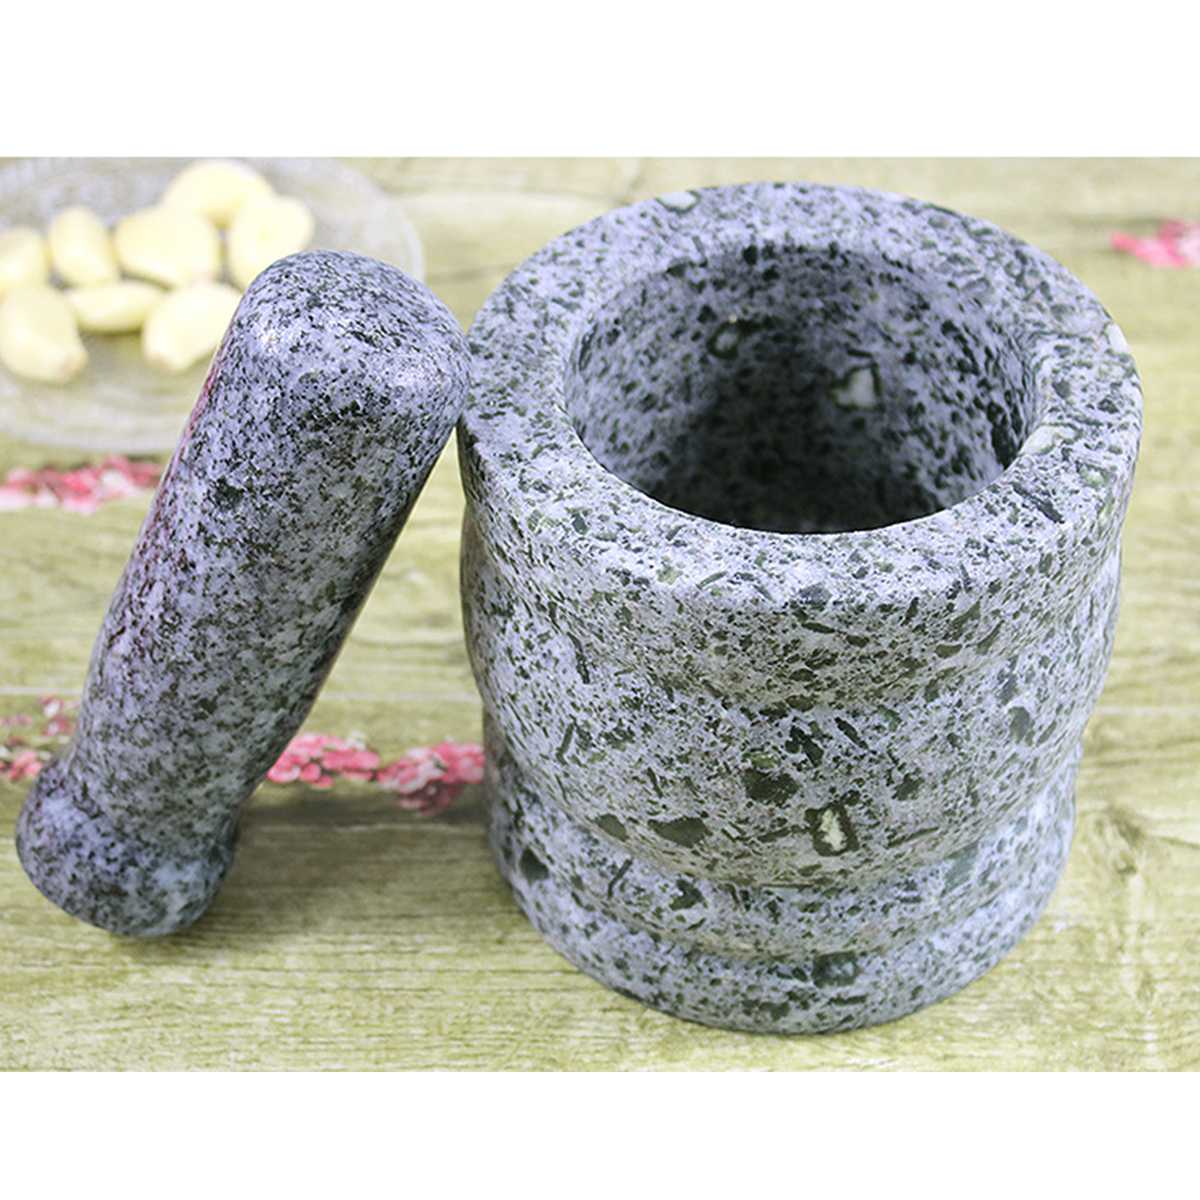 Handmade Garlic Mortar, Household Garlic Mortar, Stone Mortar And Grinder